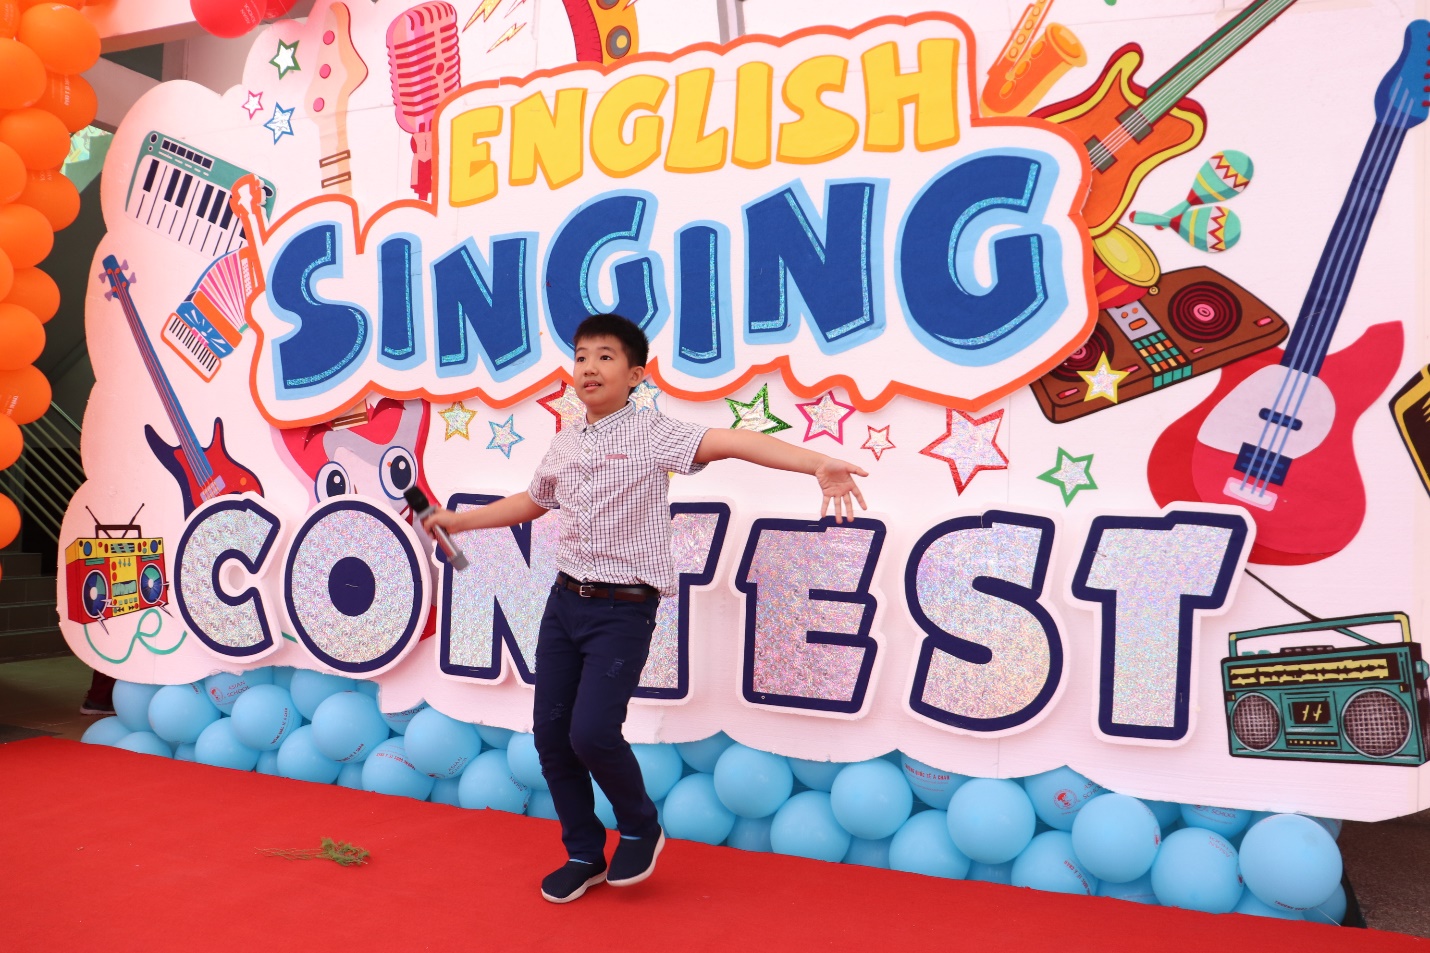 ENGLISH SINGING CONTEST 2019 